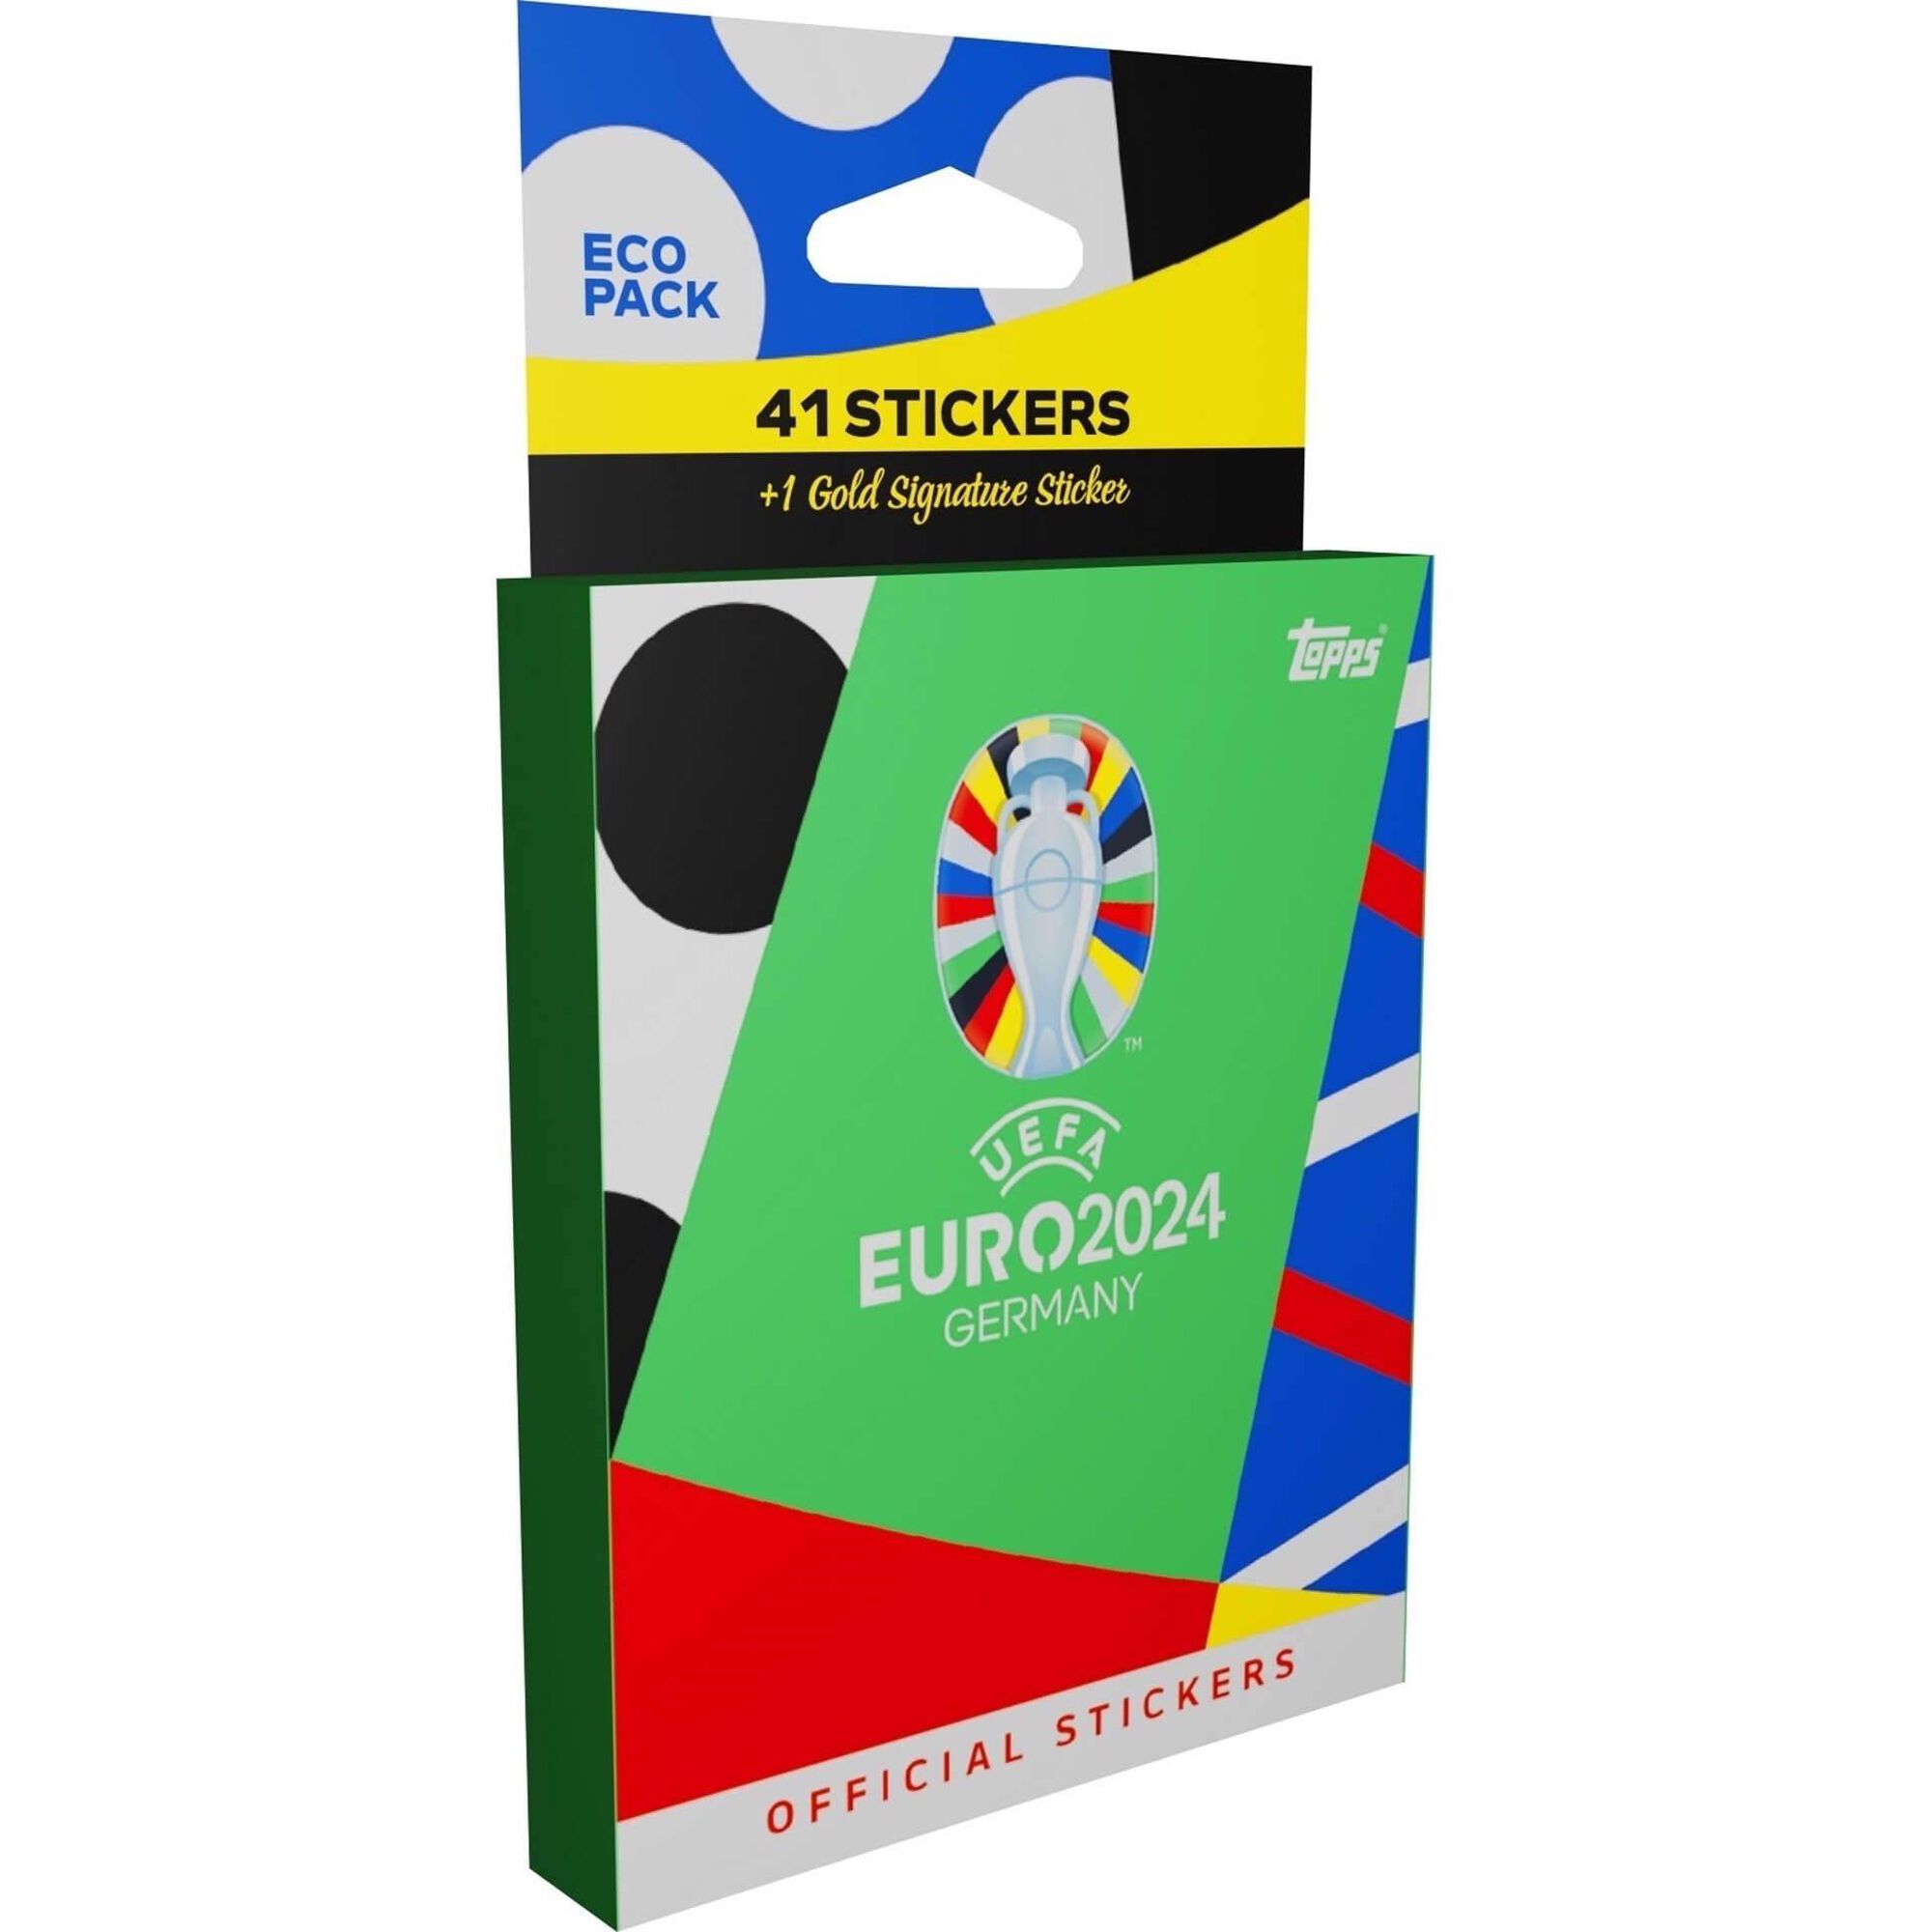 Eco Pack Stickers UEFA Euro 2024